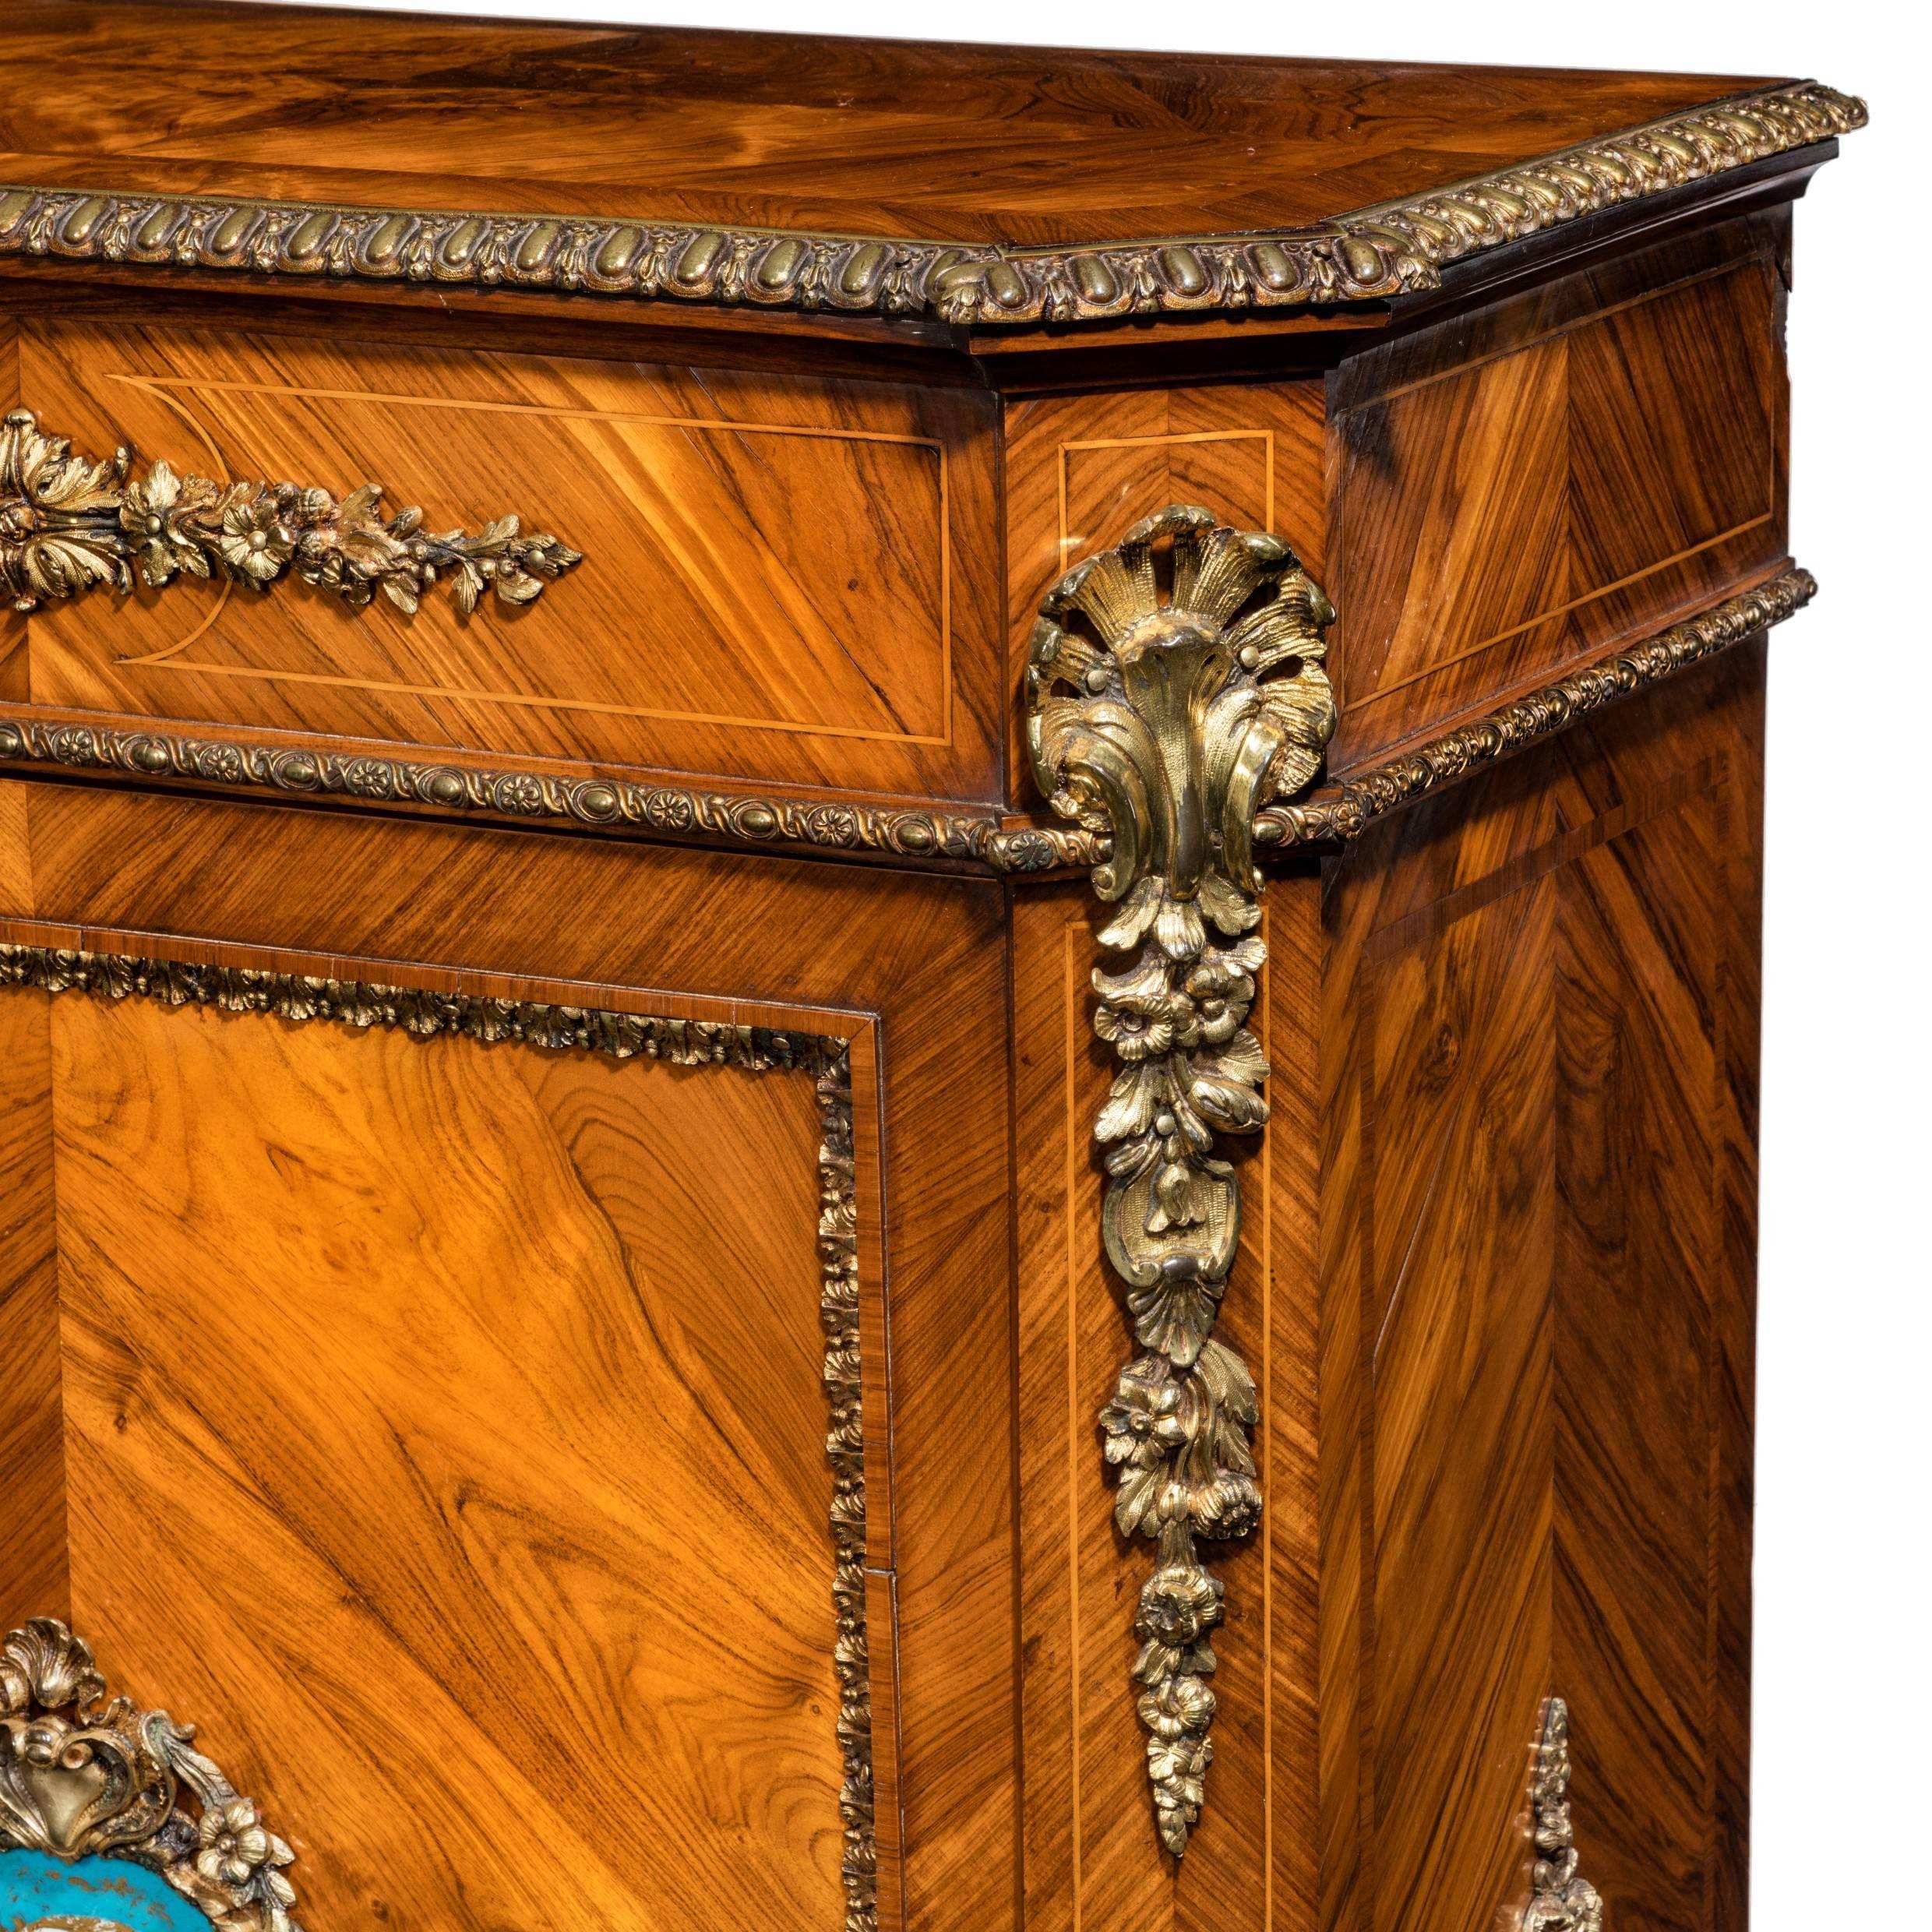 French Provincial Kingwood Antique Side Cabinet